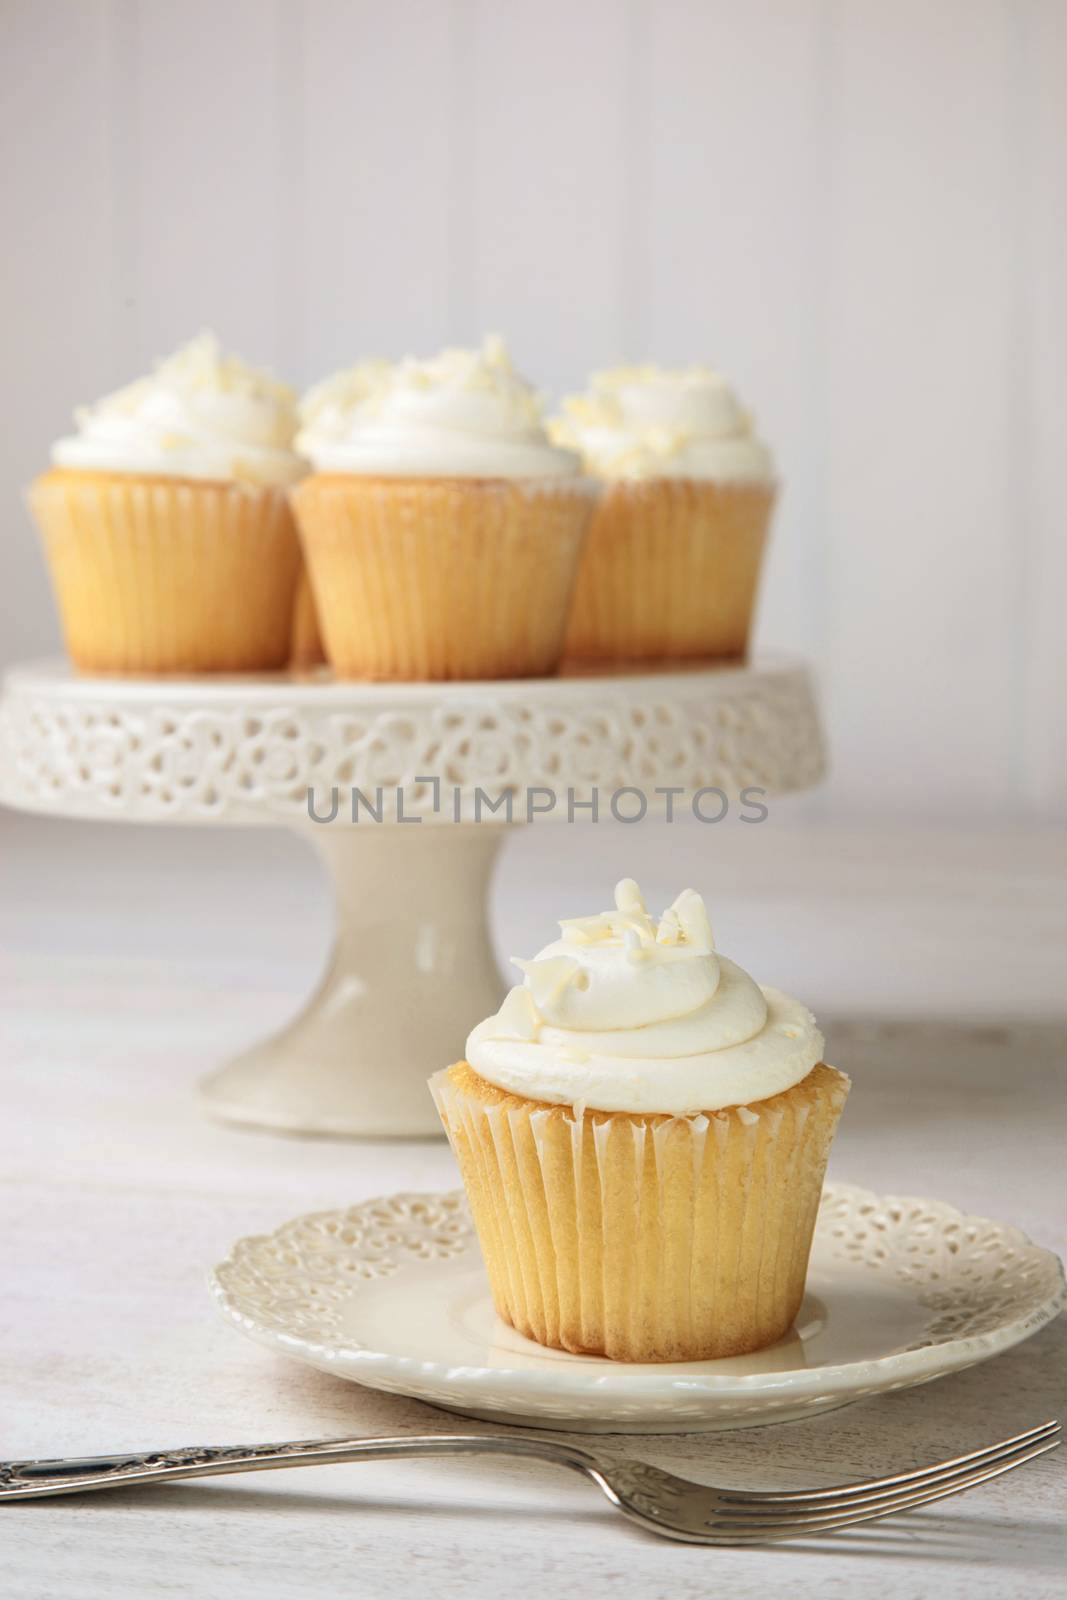 Sweet vanilla cupcakes ready to eat